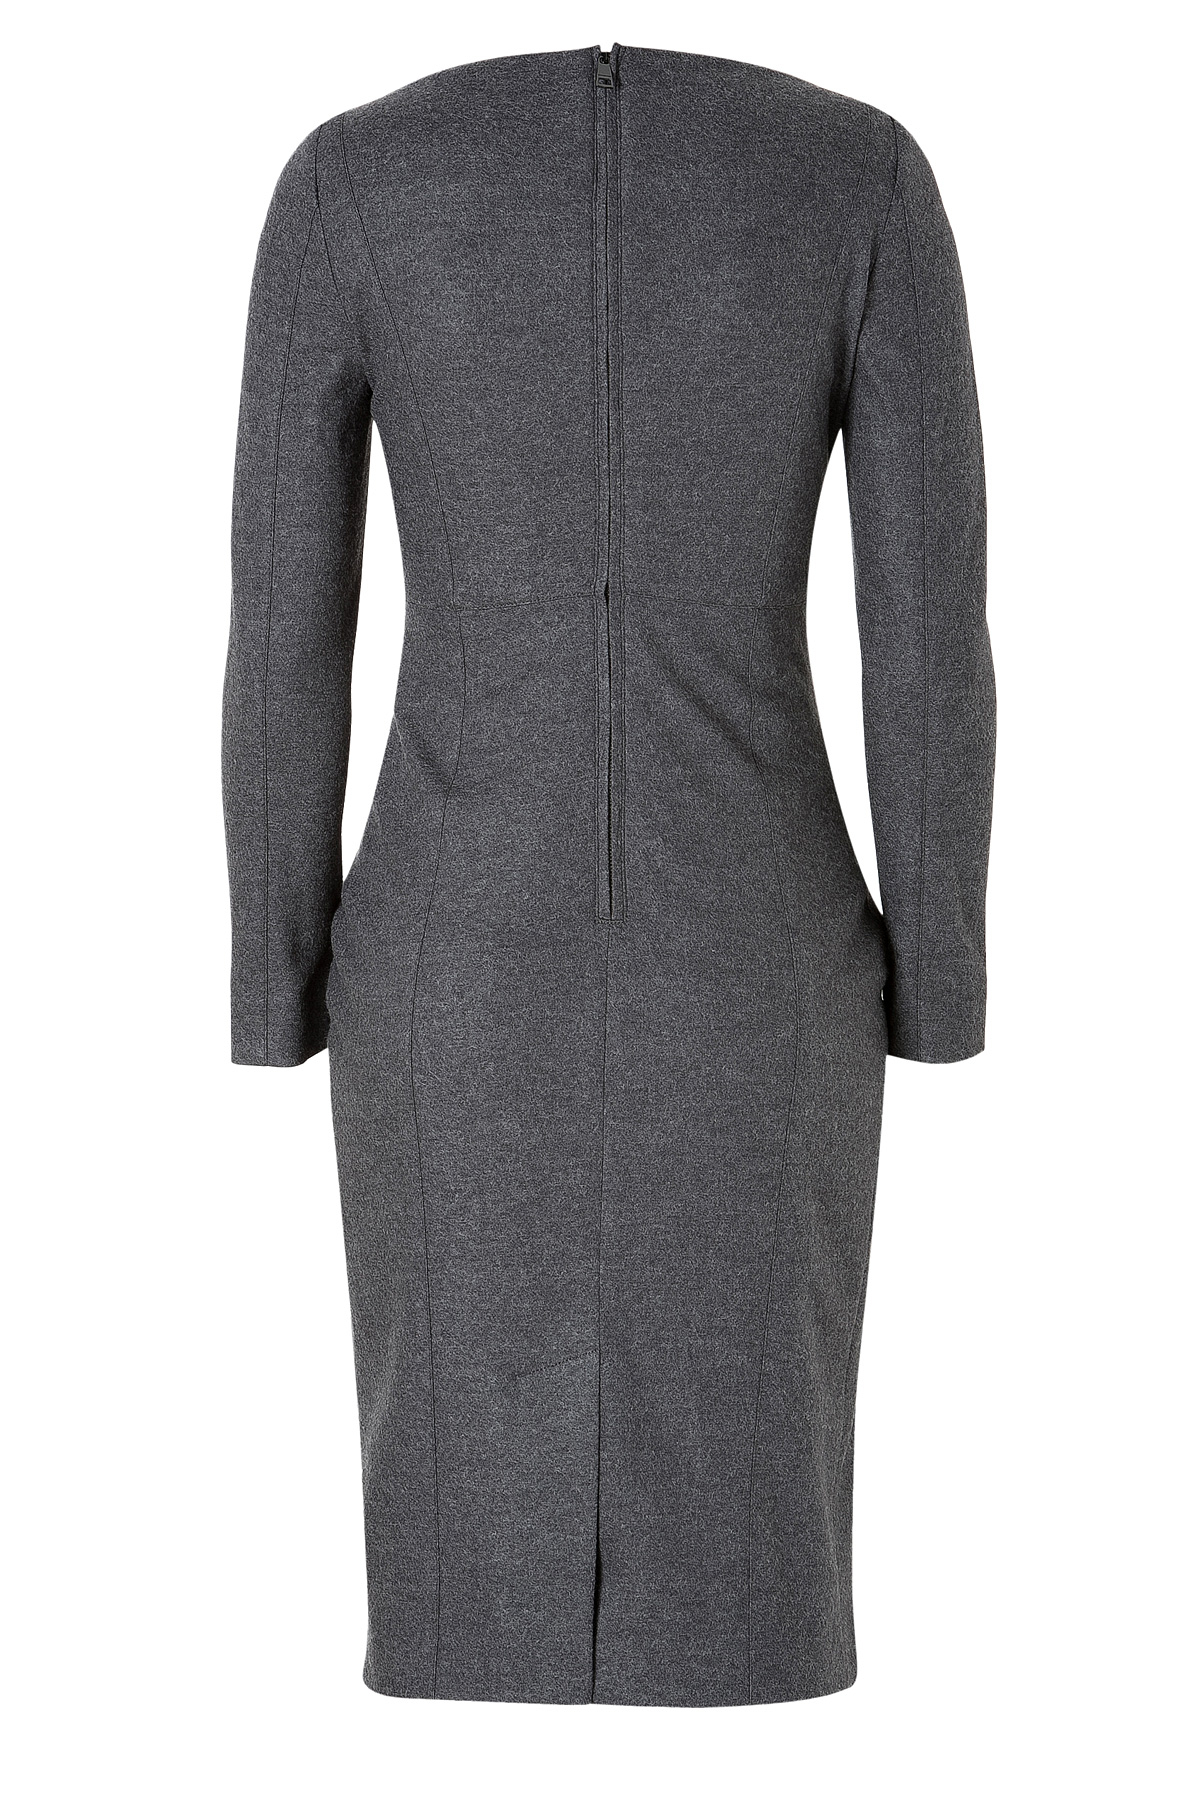 Lyst - Burberry Wool Darcey Dress in Heather Grey in Gray